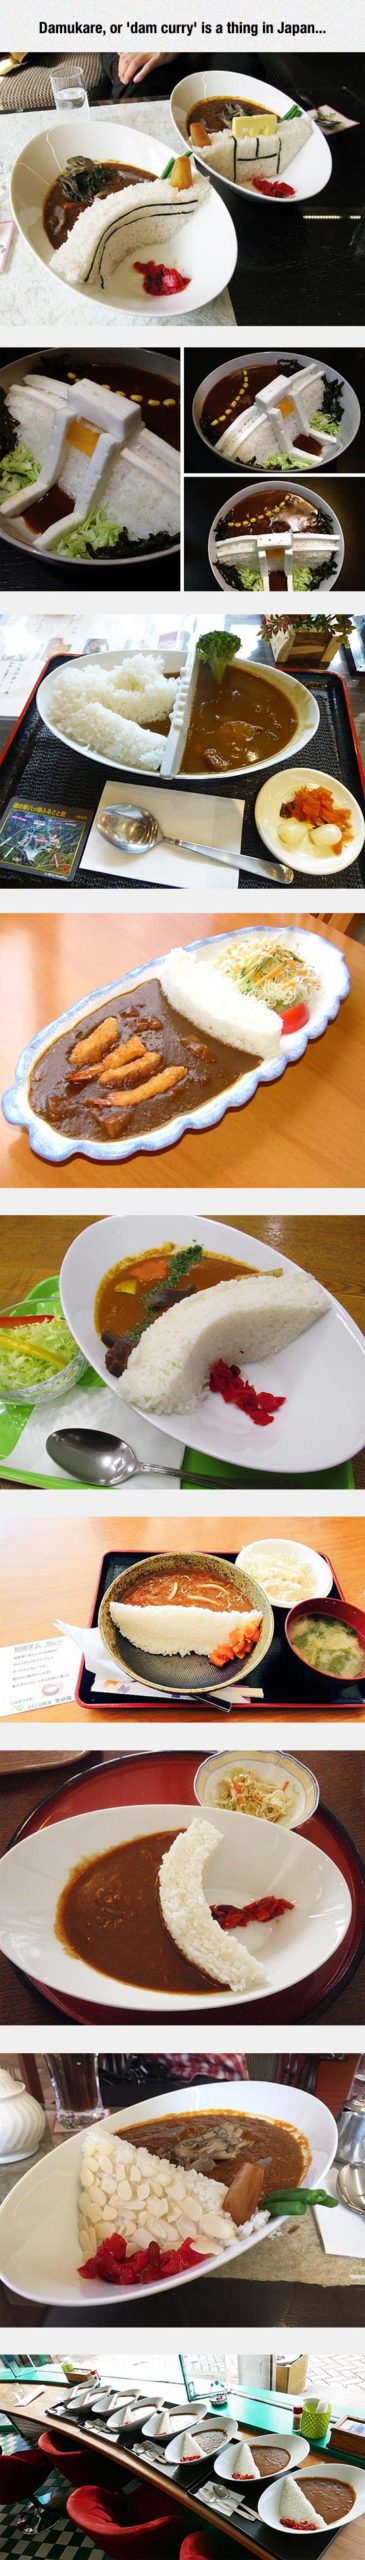 Dam+curry